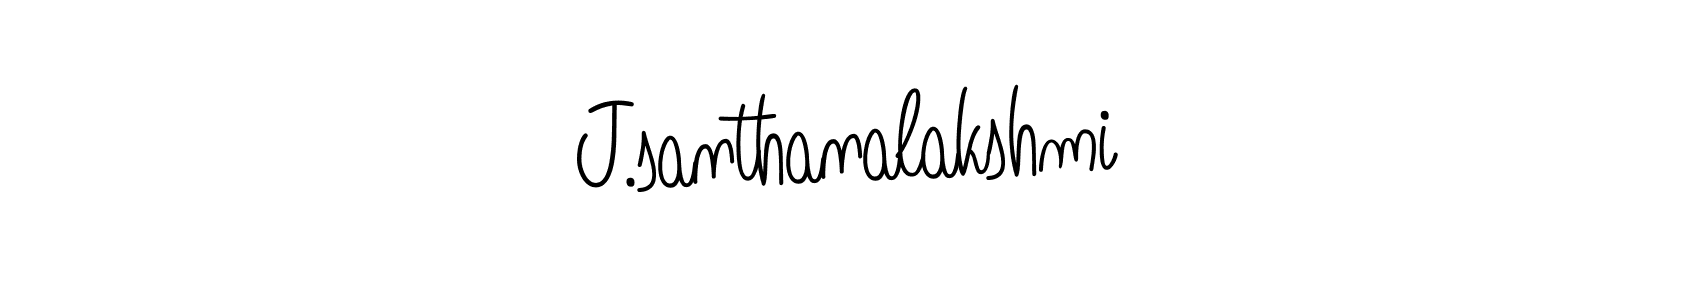 How to Draw J.santhanalakshmi signature style? Angelique-Rose-font-FFP is a latest design signature styles for name J.santhanalakshmi. J.santhanalakshmi signature style 5 images and pictures png